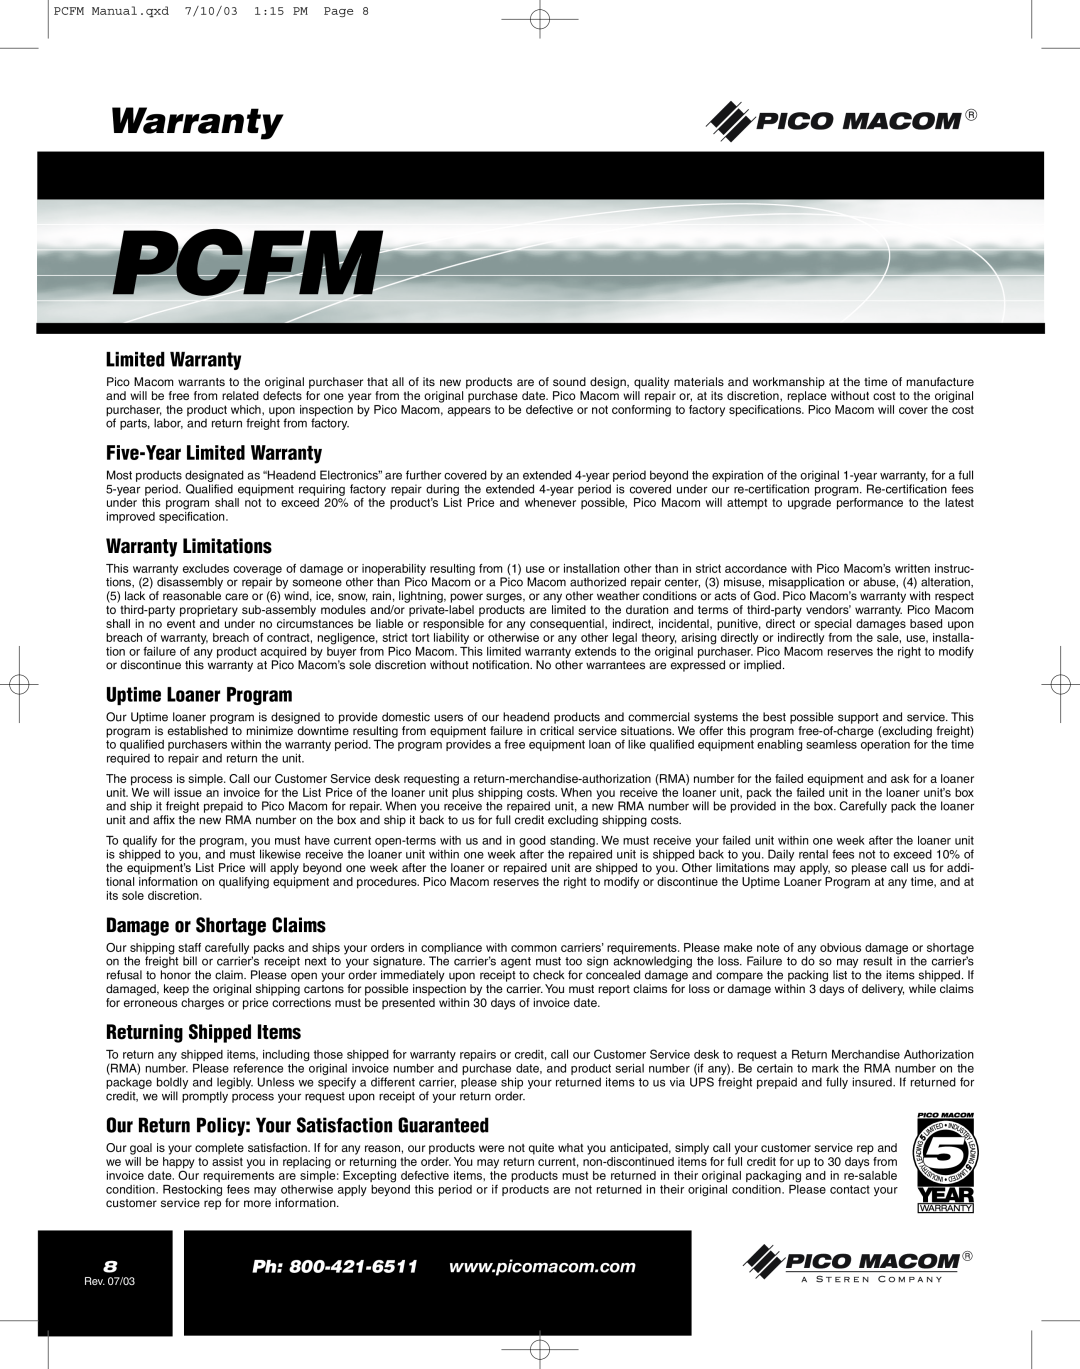 Pico Macom FM Stereo Audio Modulator Five-YearLimited Warranty, Warranty Limitations, Uptime Loaner Program, Pcfm 